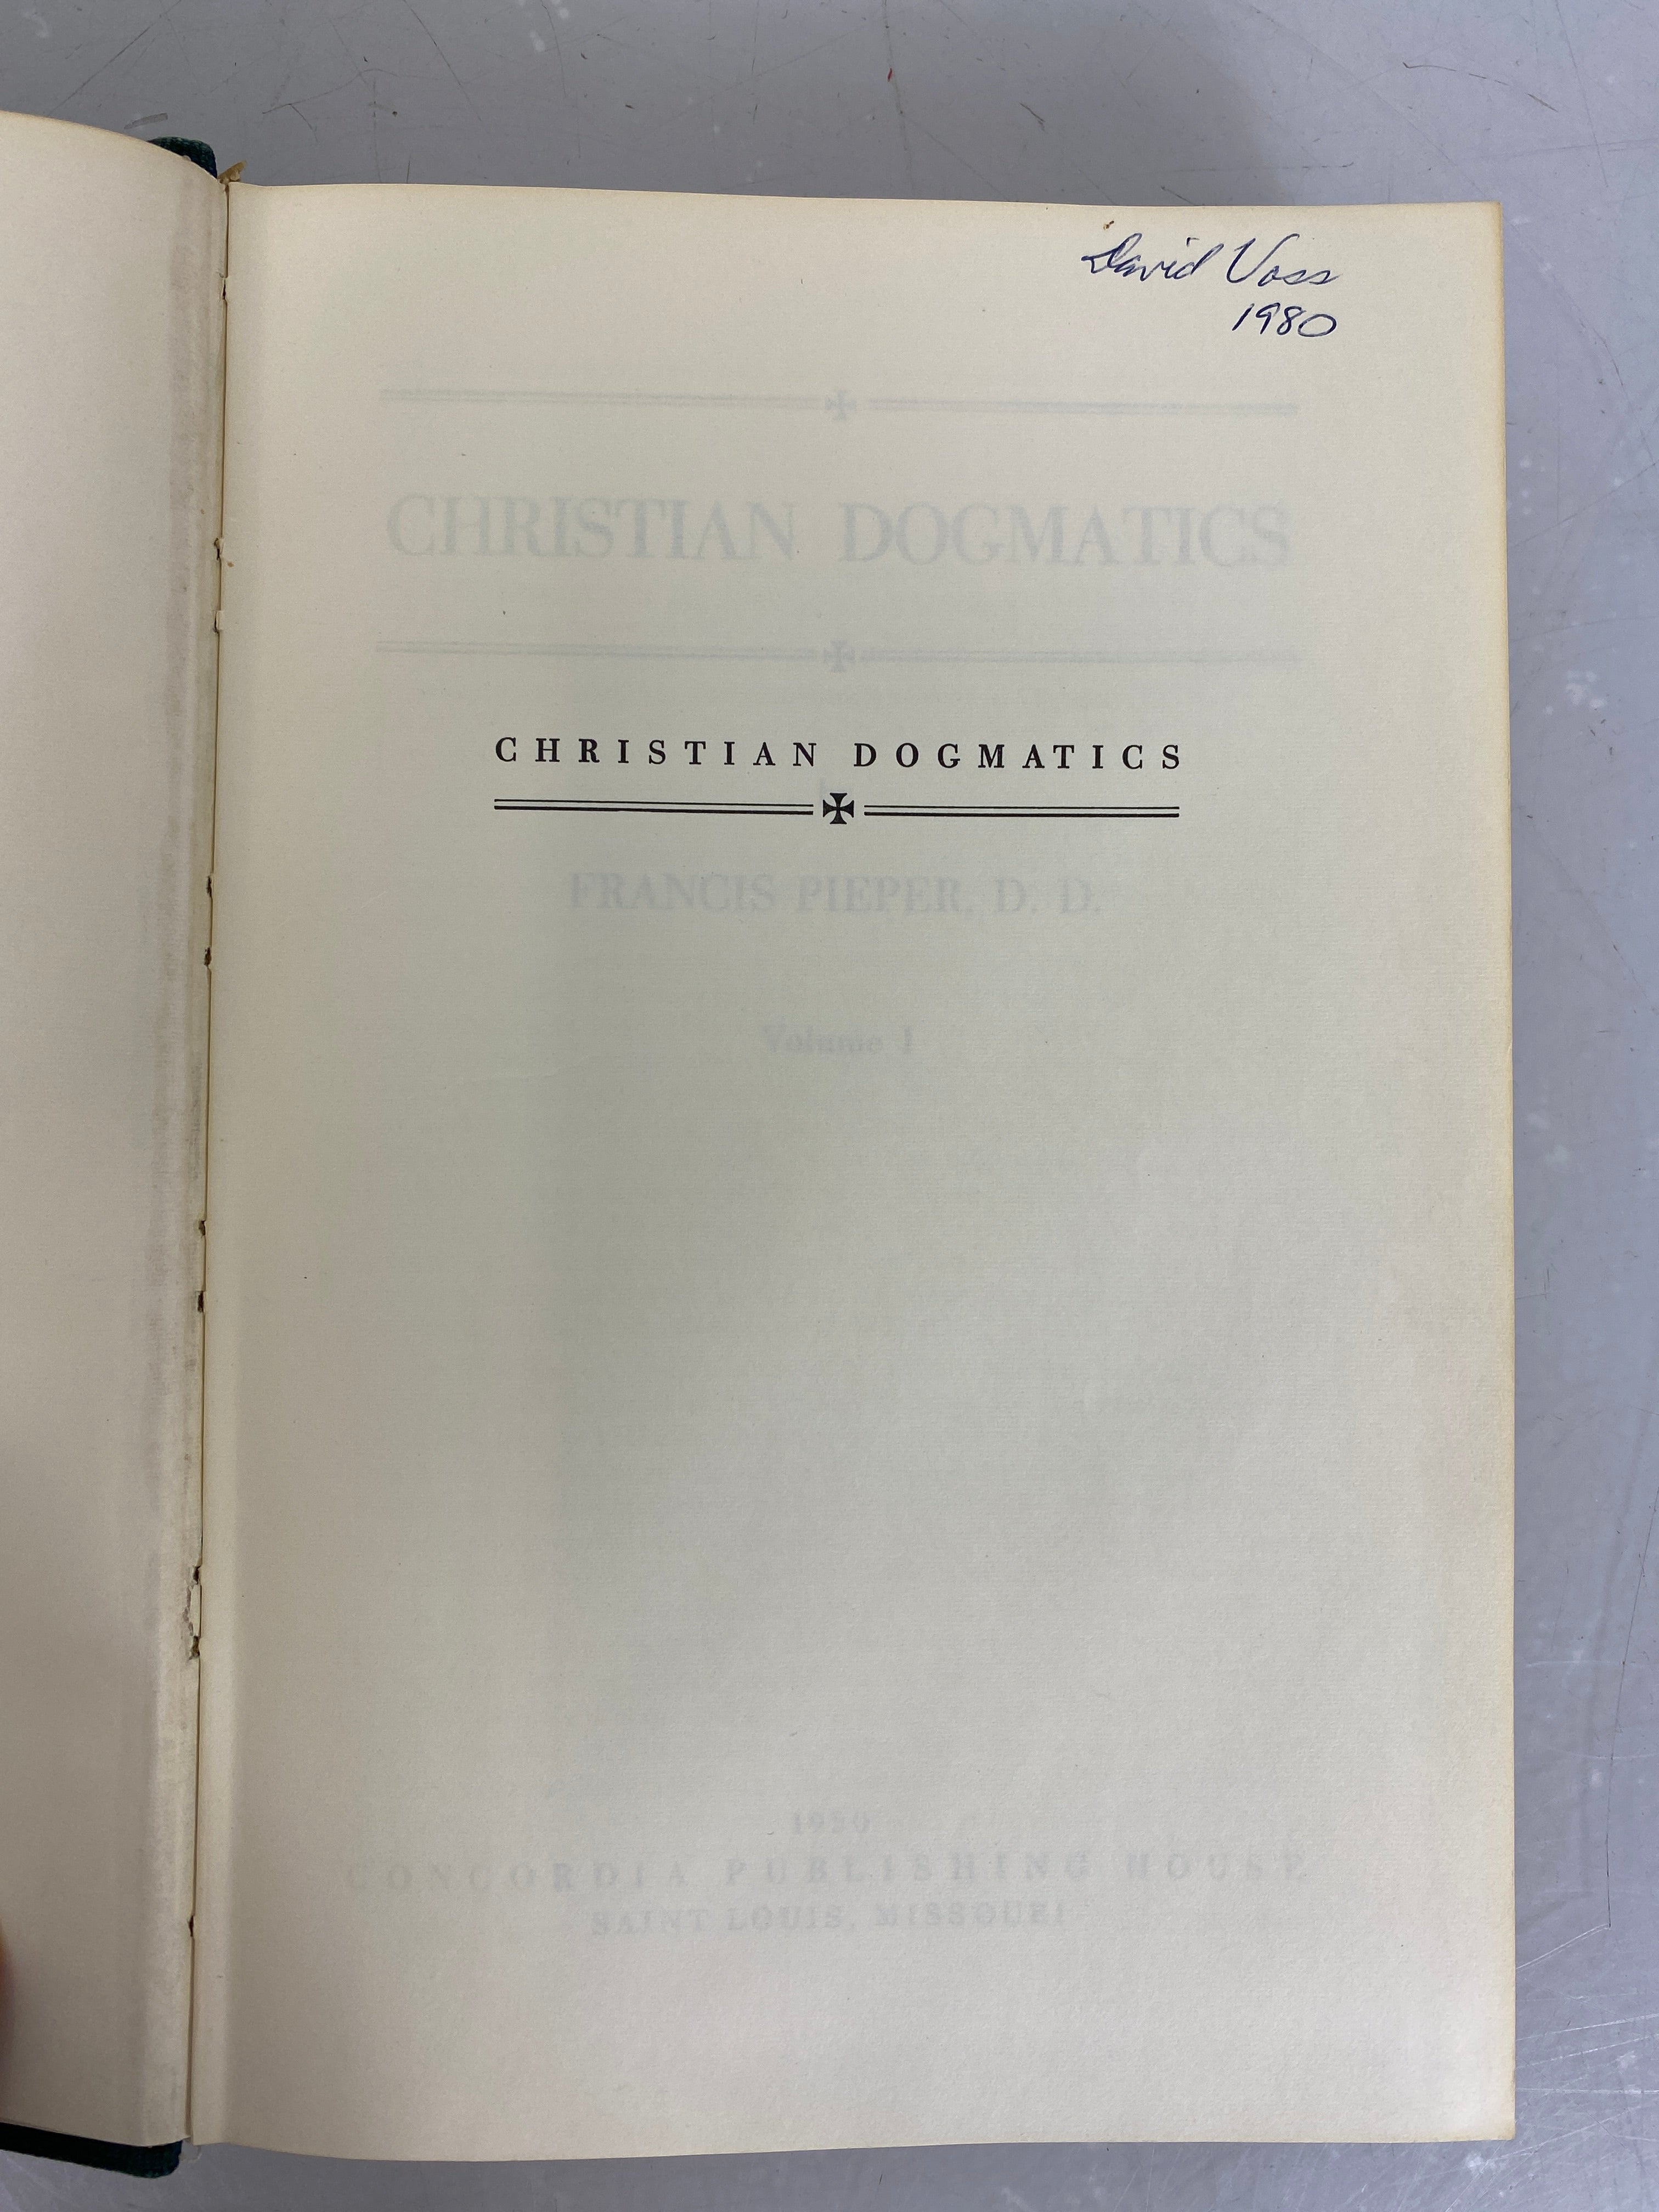 Christian Dogmatics Volume I by Francis Pieper Third Printing 1960 HC